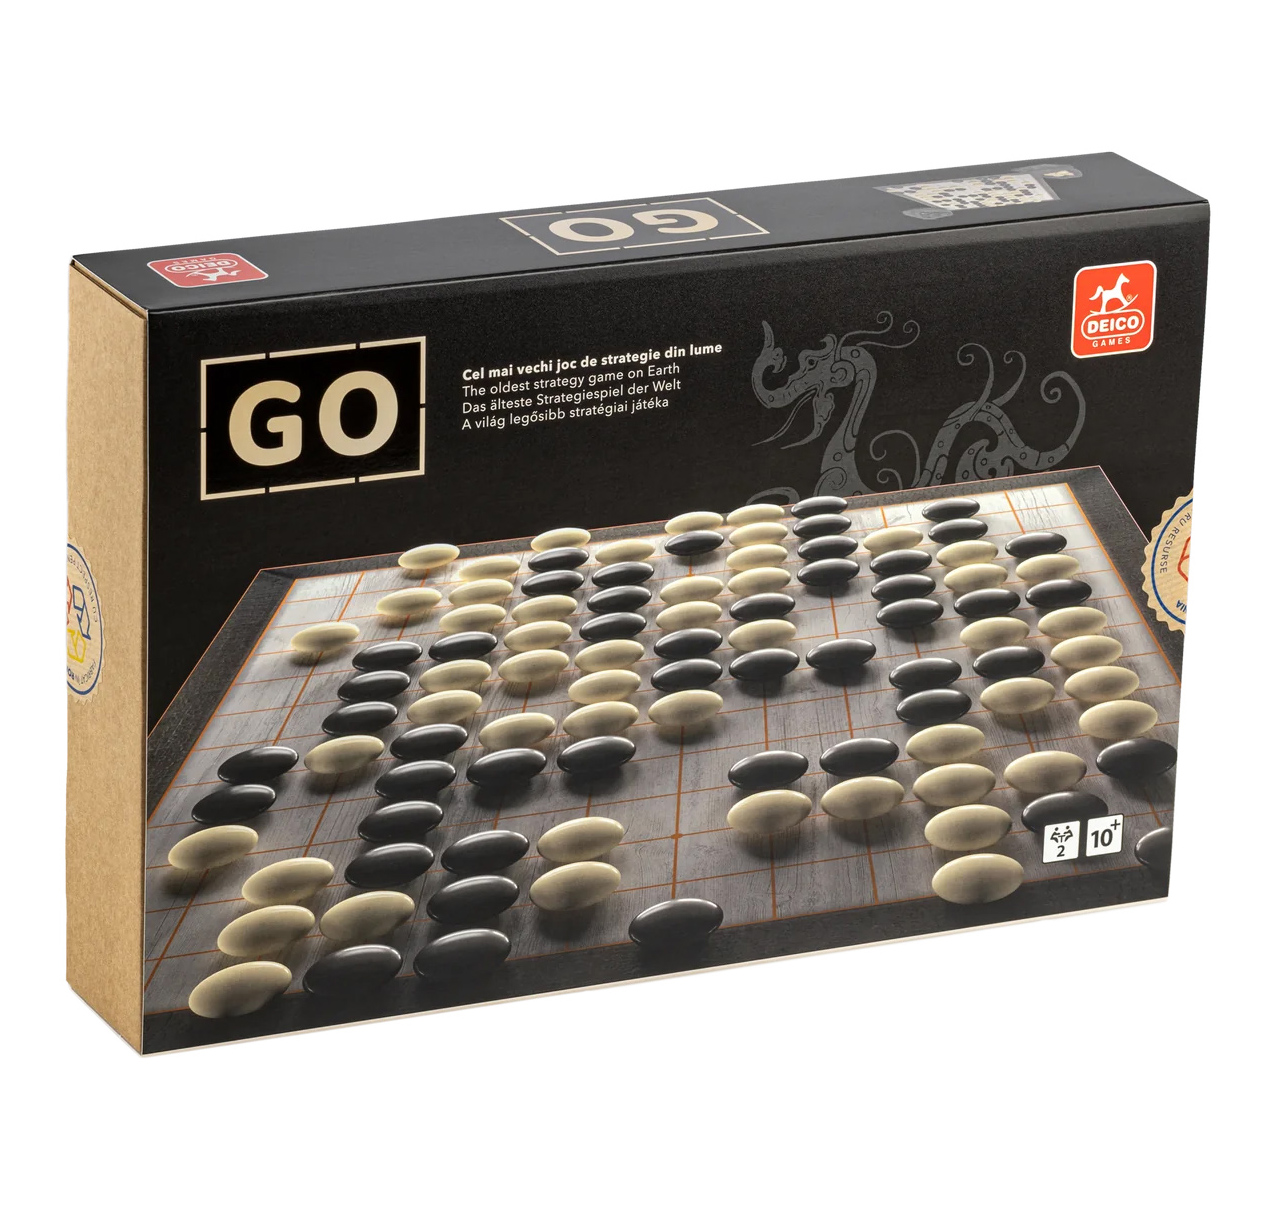 Joc - Go | Deico Games